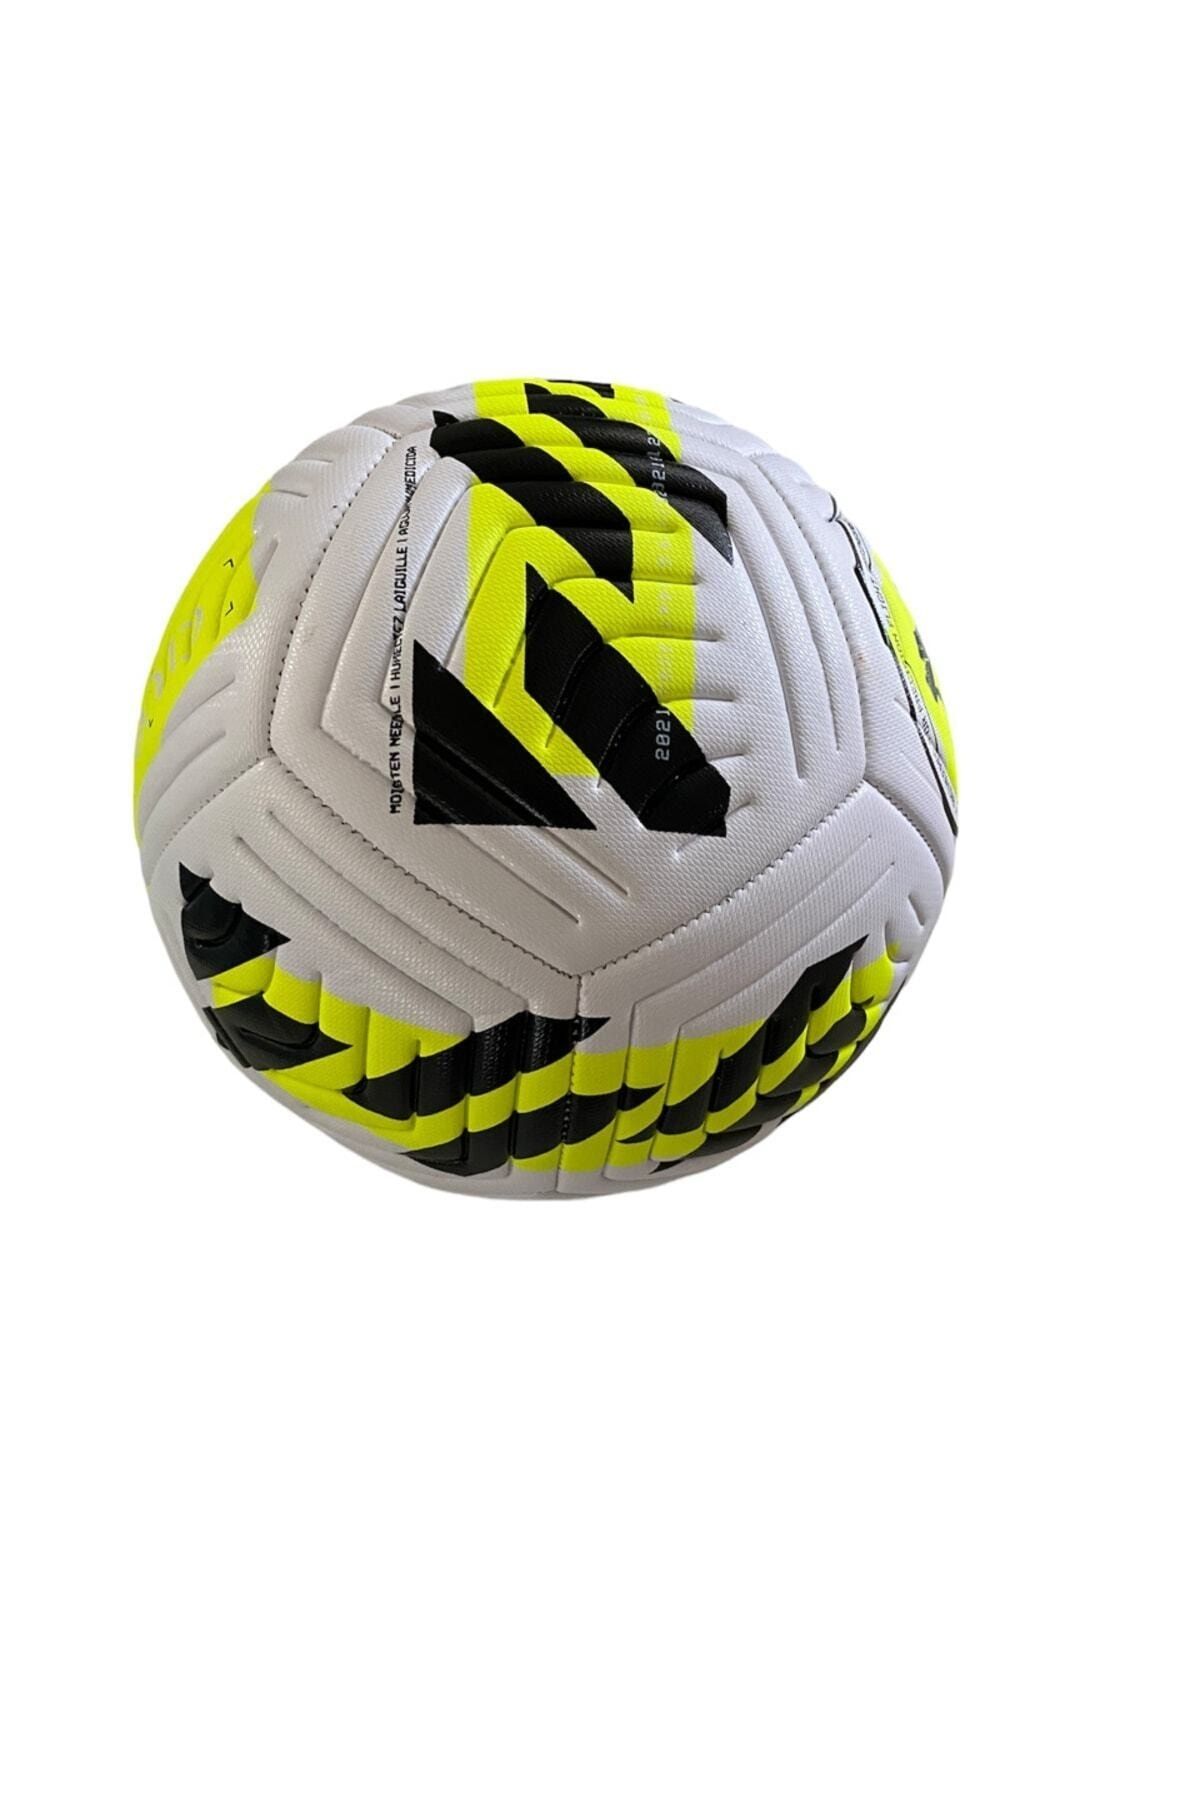 Muba 4 Astarlı Sert Zemin Futbol Topu Halı Saha Topu Maç Topu 420gr